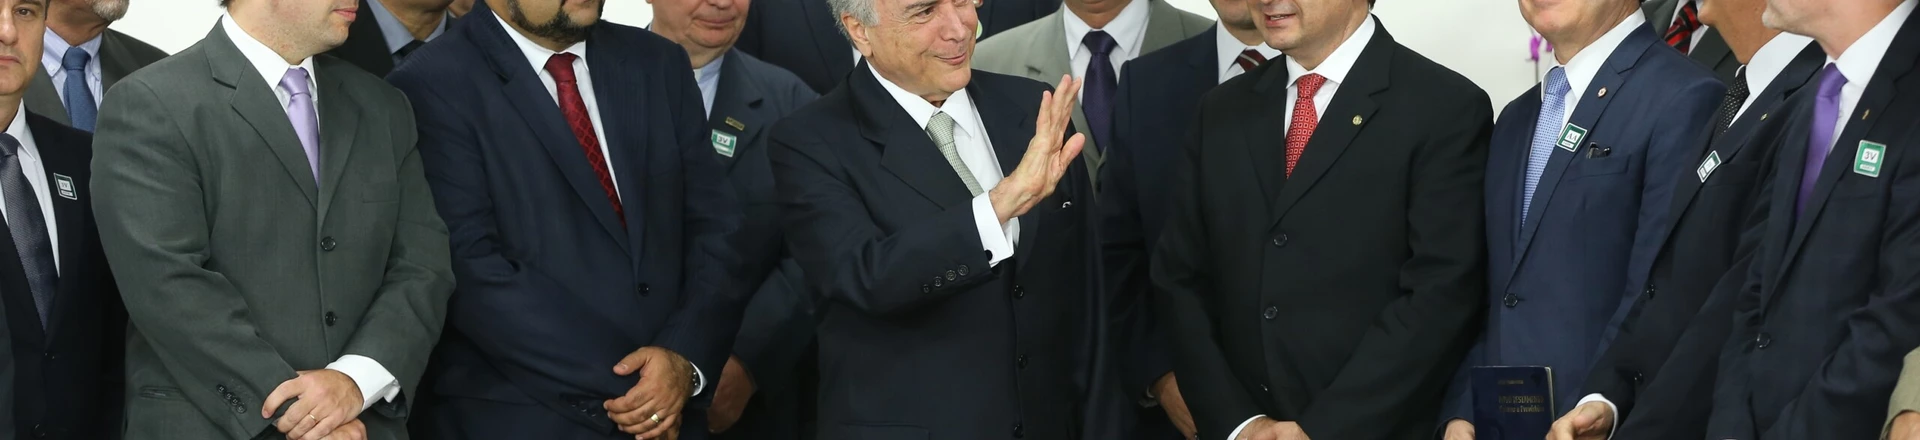 Brasília- DF 16-06-2016     Presidente interino, Michel Temer com parlamentares, evangelicos e jurista. Foto Lula Marques/Agência PT